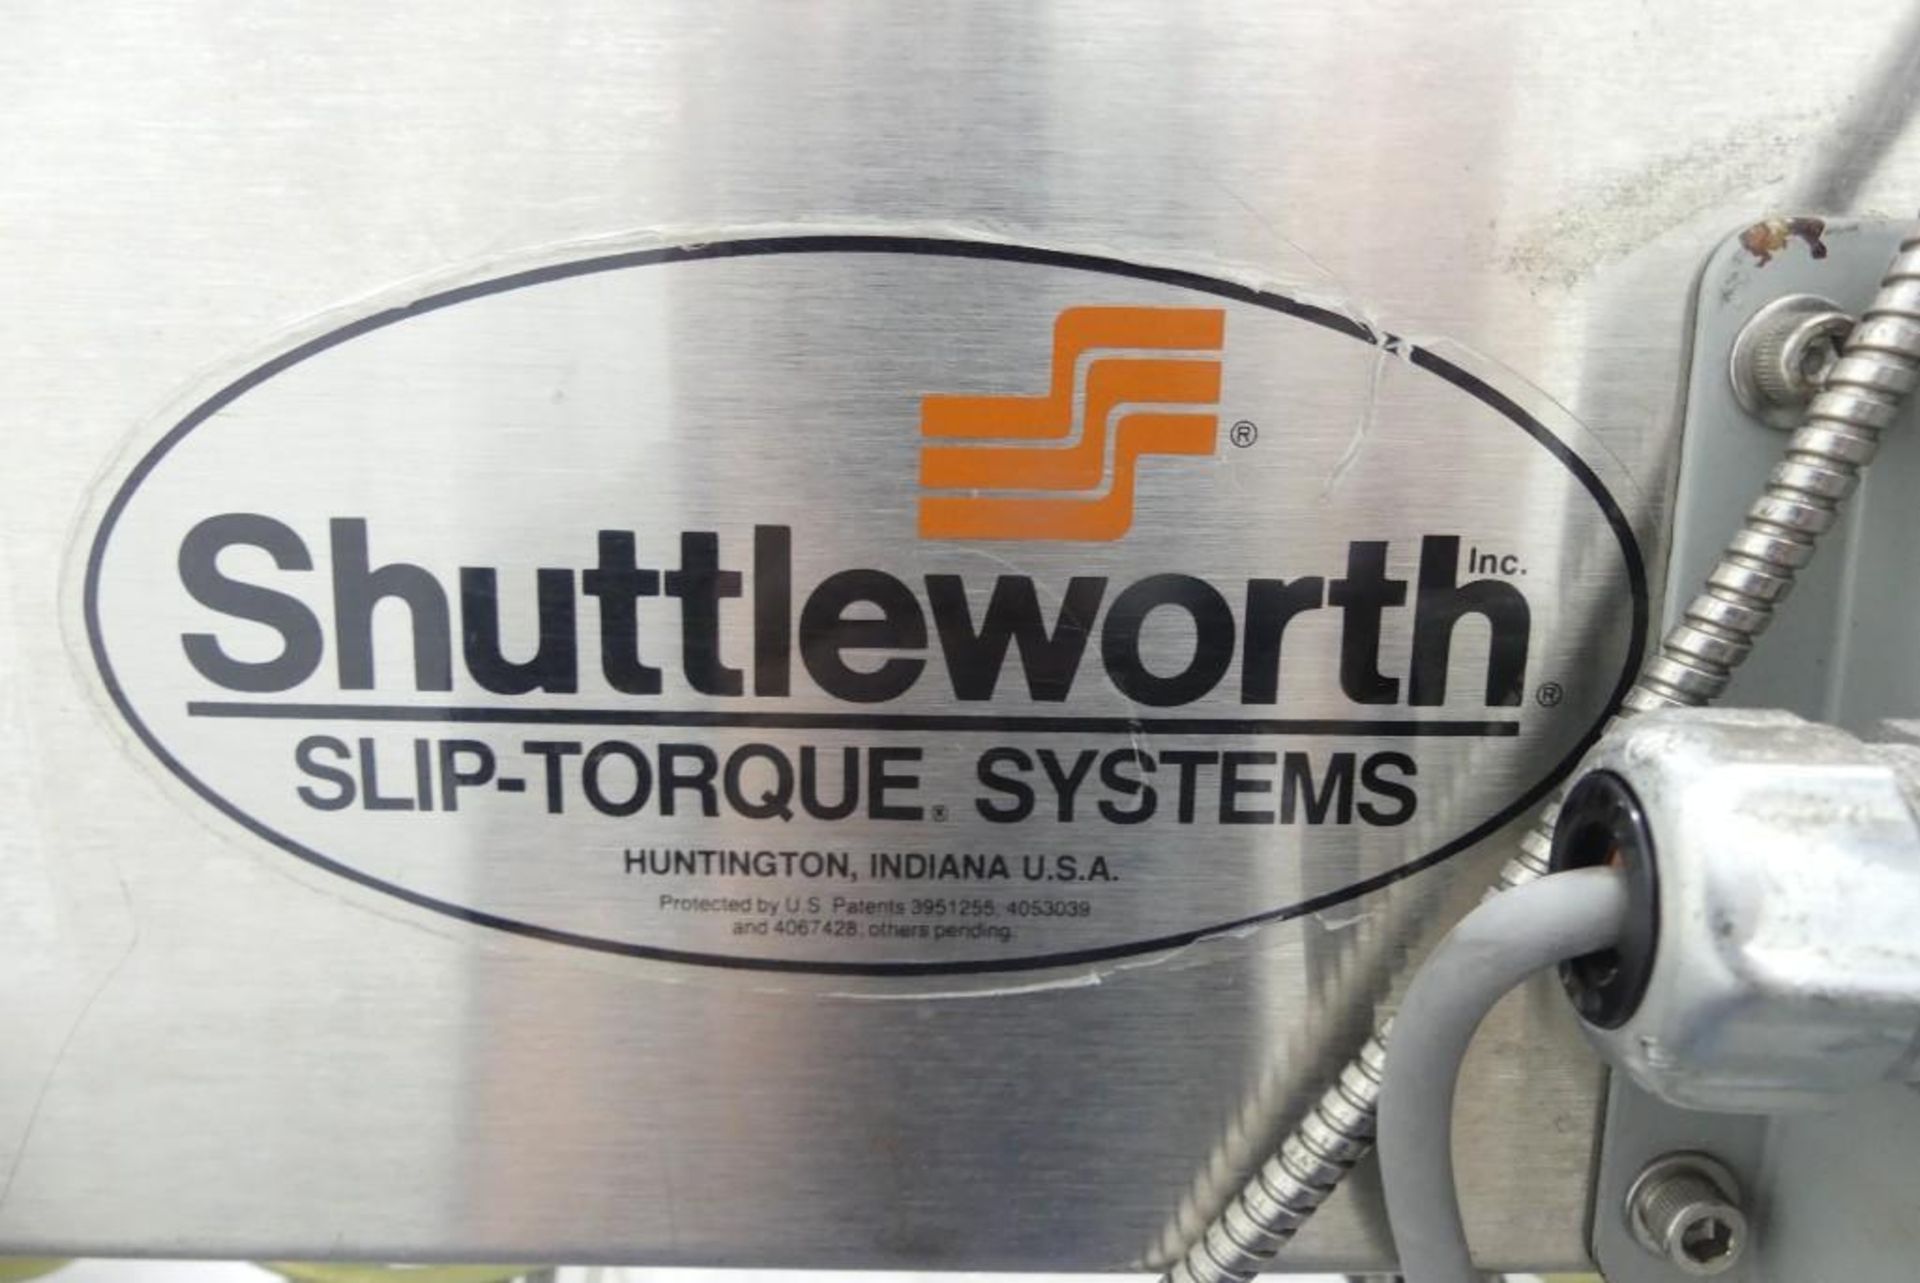 Shuttleworth Low Pressure Conveyor 6" W x 100" L - Image 9 of 14